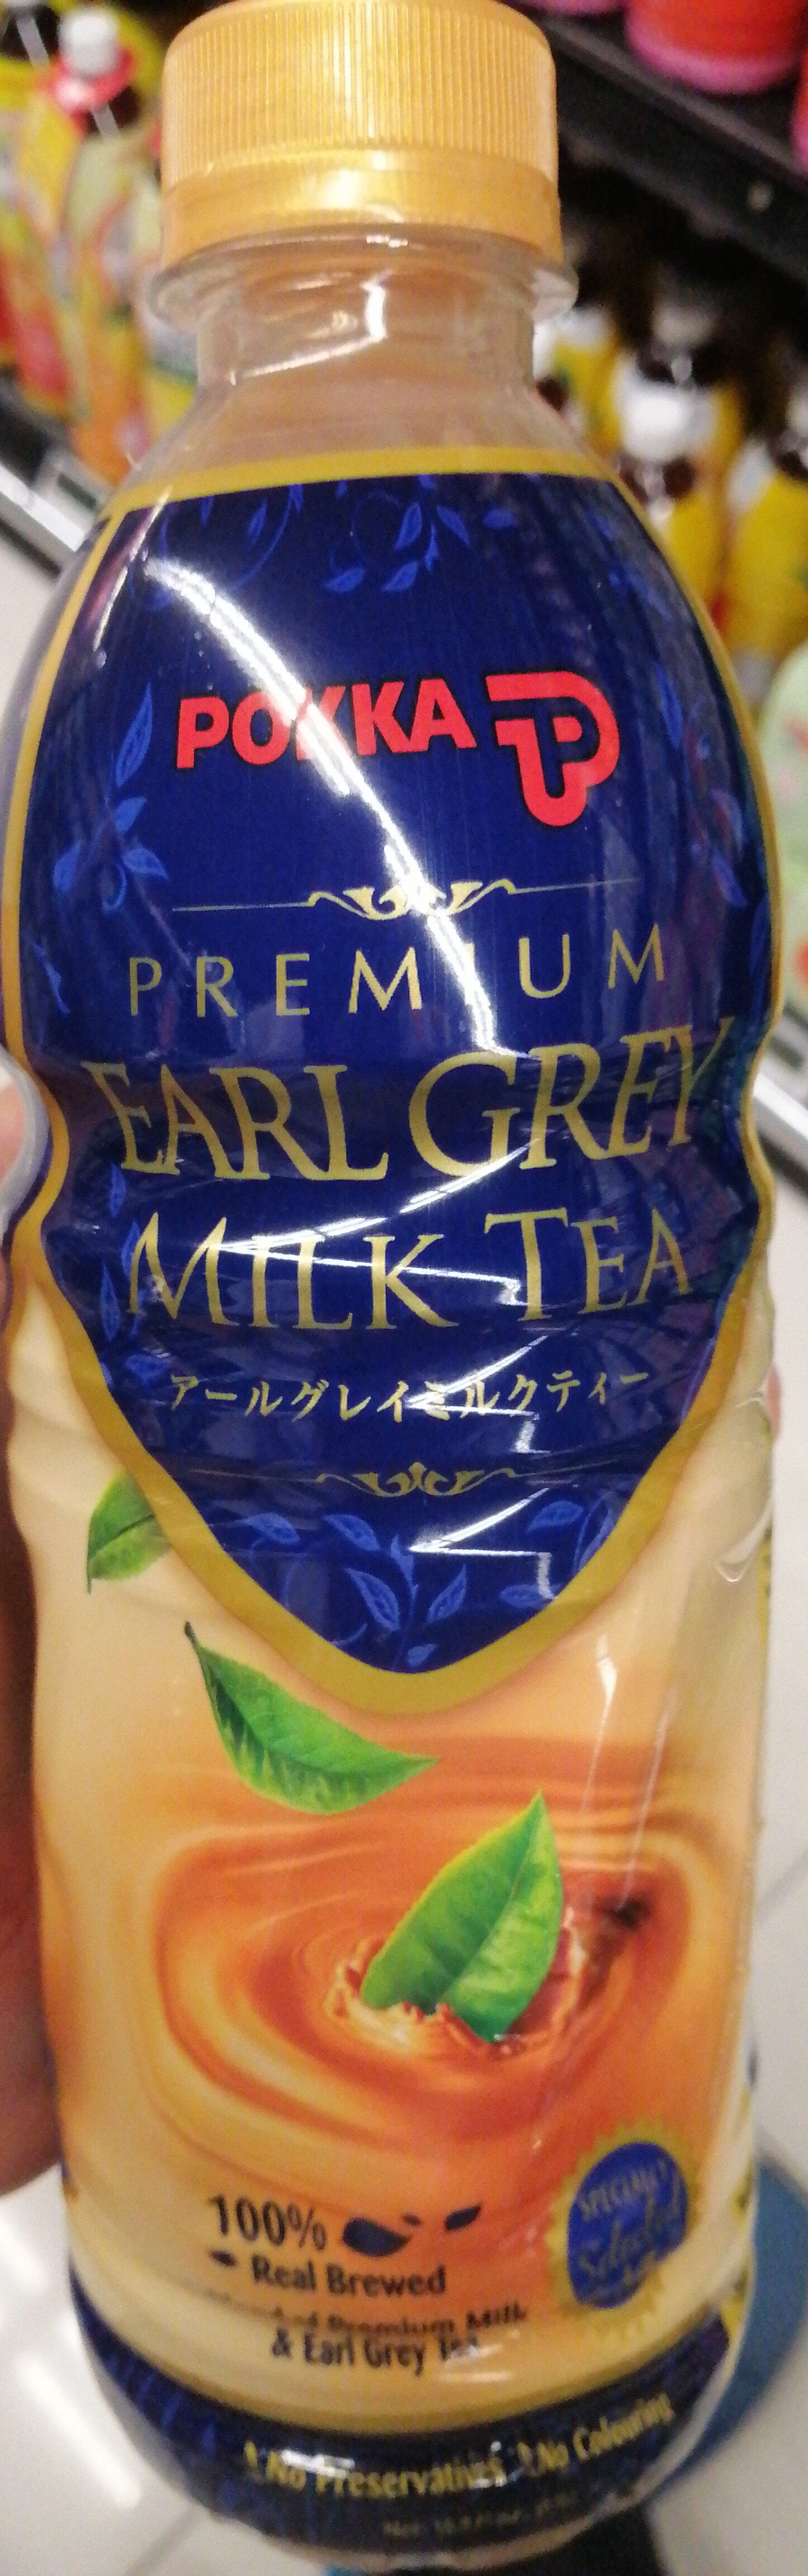 Pokka Premium Earl Grey Milk Tea - Product - en